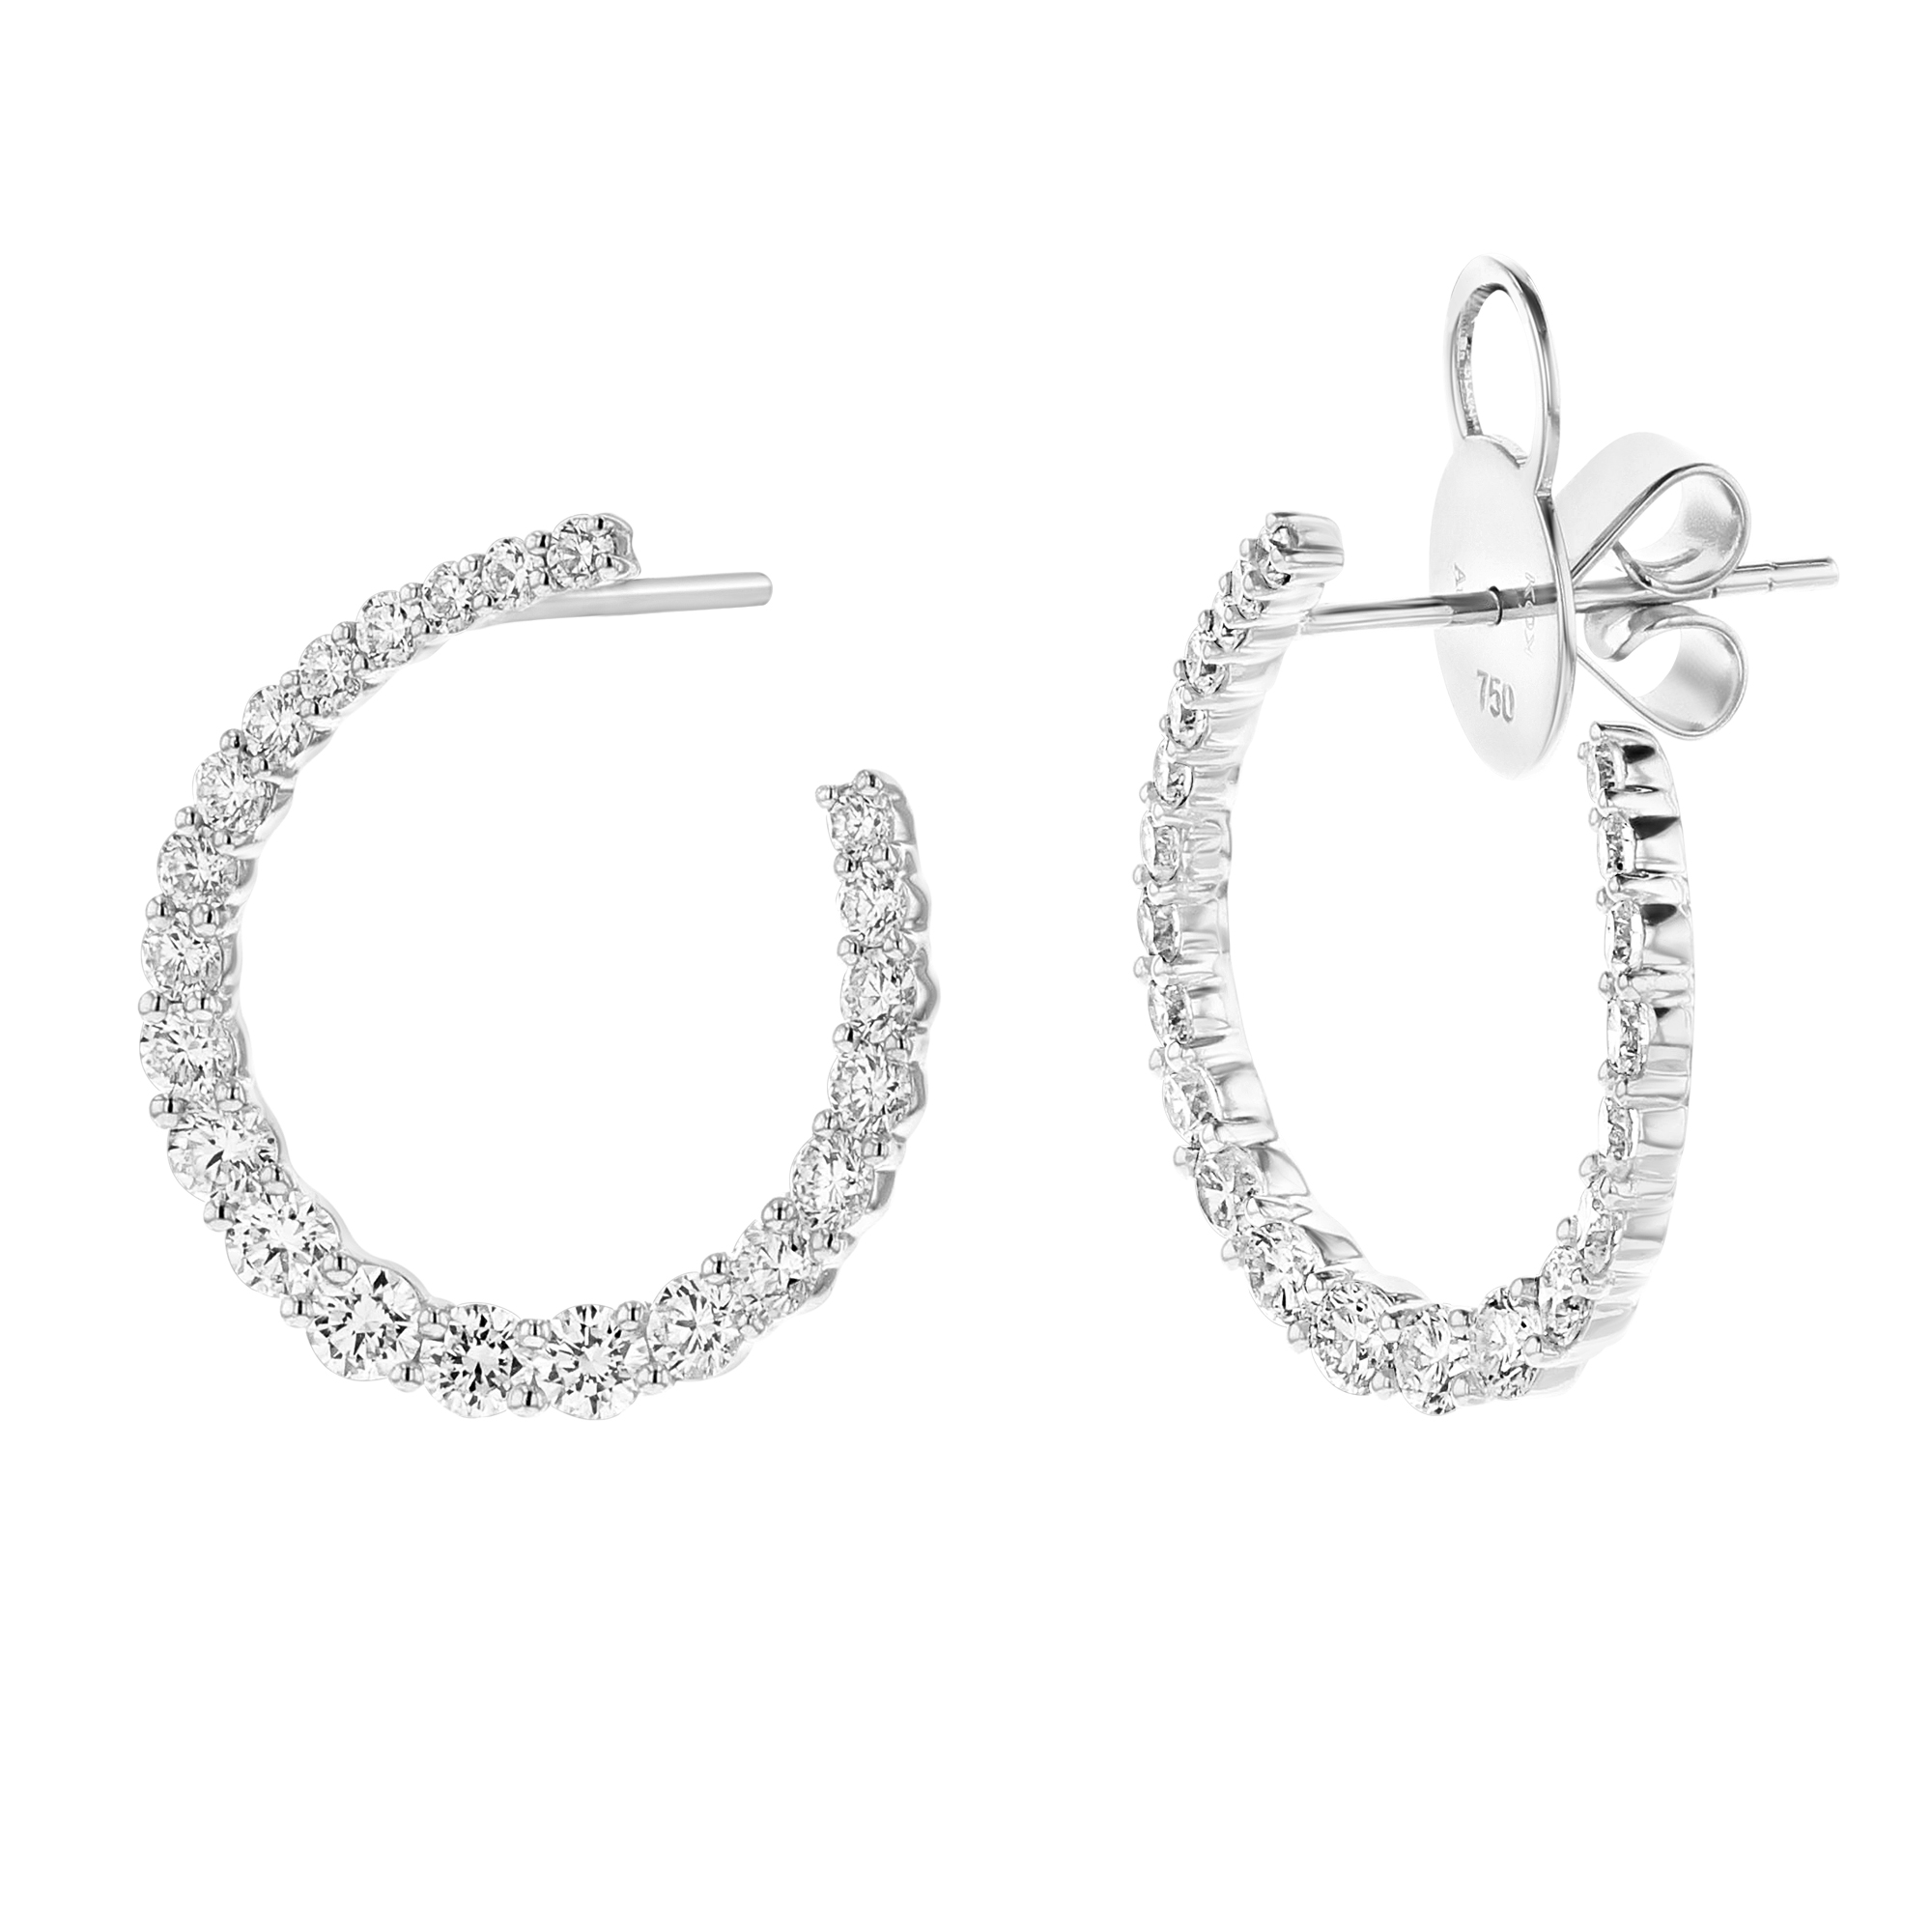 View 1.91ctw Diamond Fashion Earrings in 18k White Gold